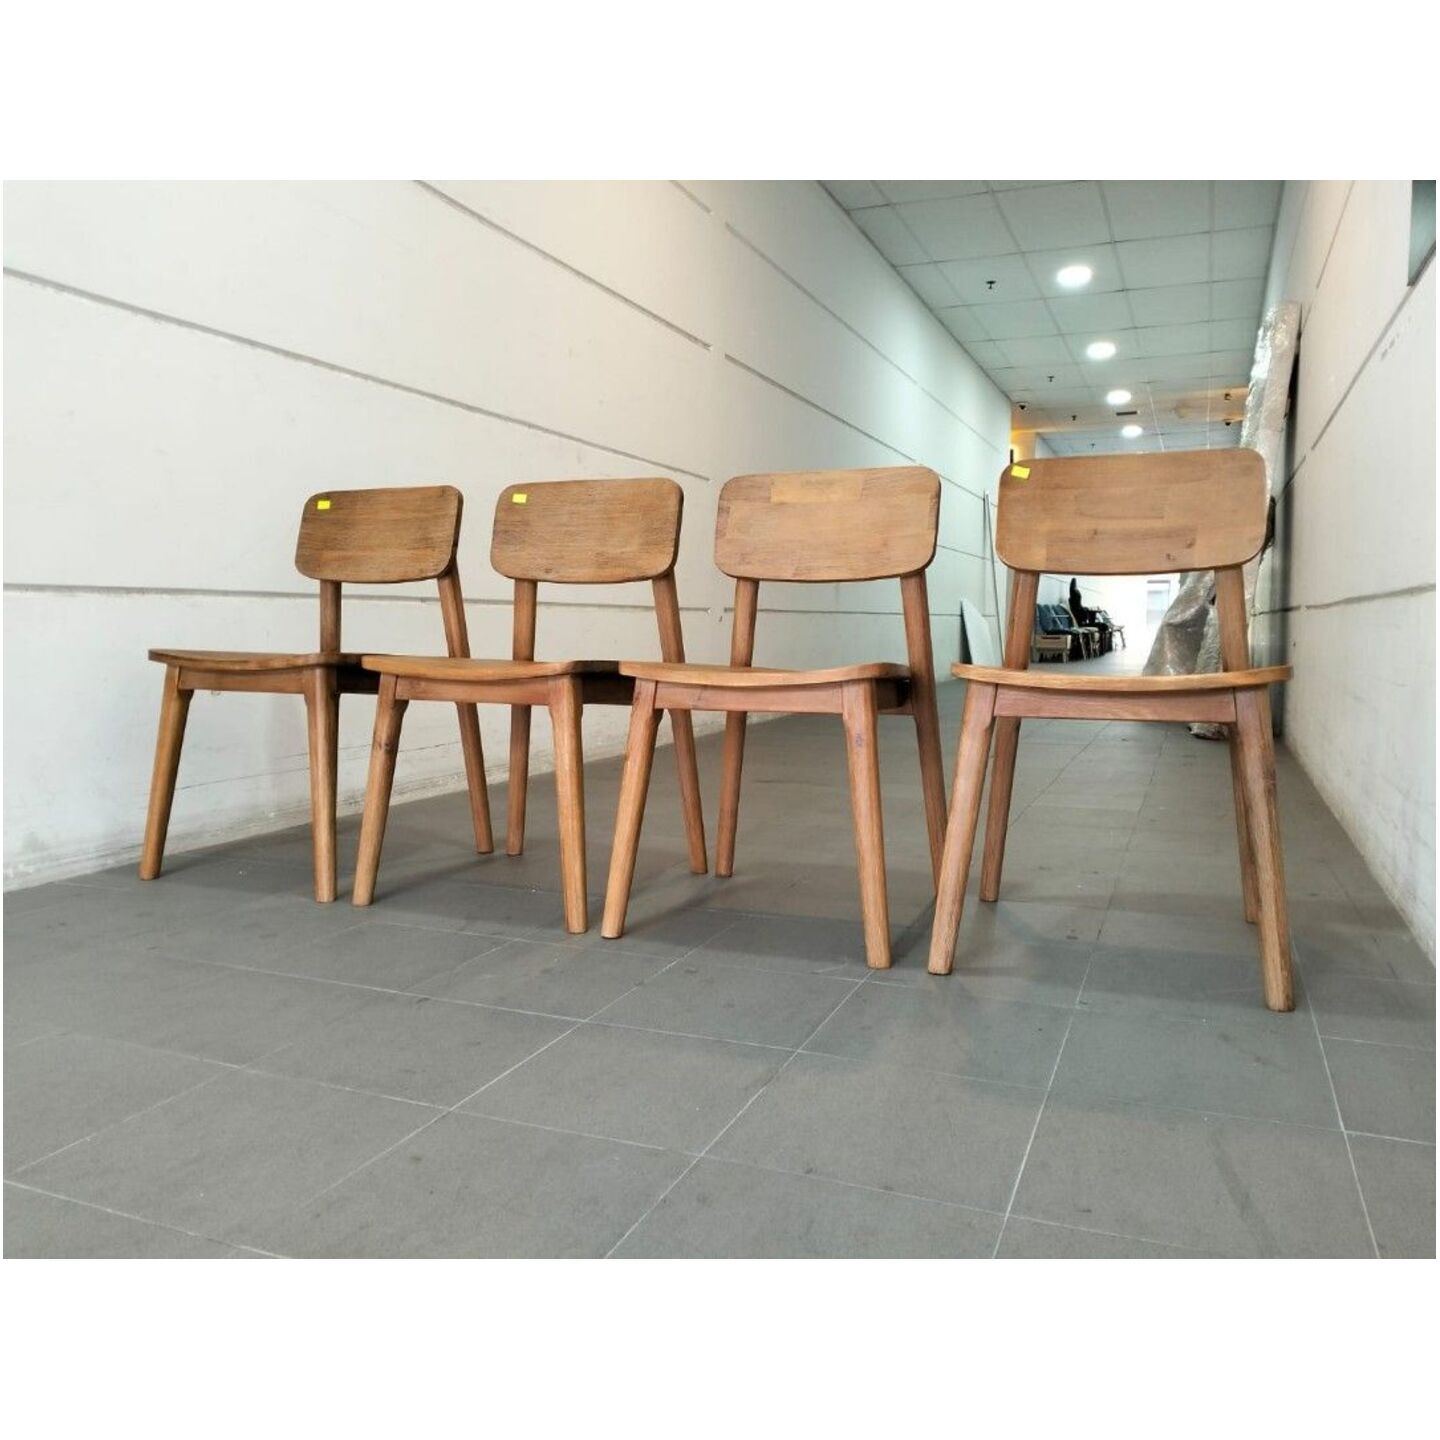 2 x VETTEL ACACIA Wood Dining Chairs